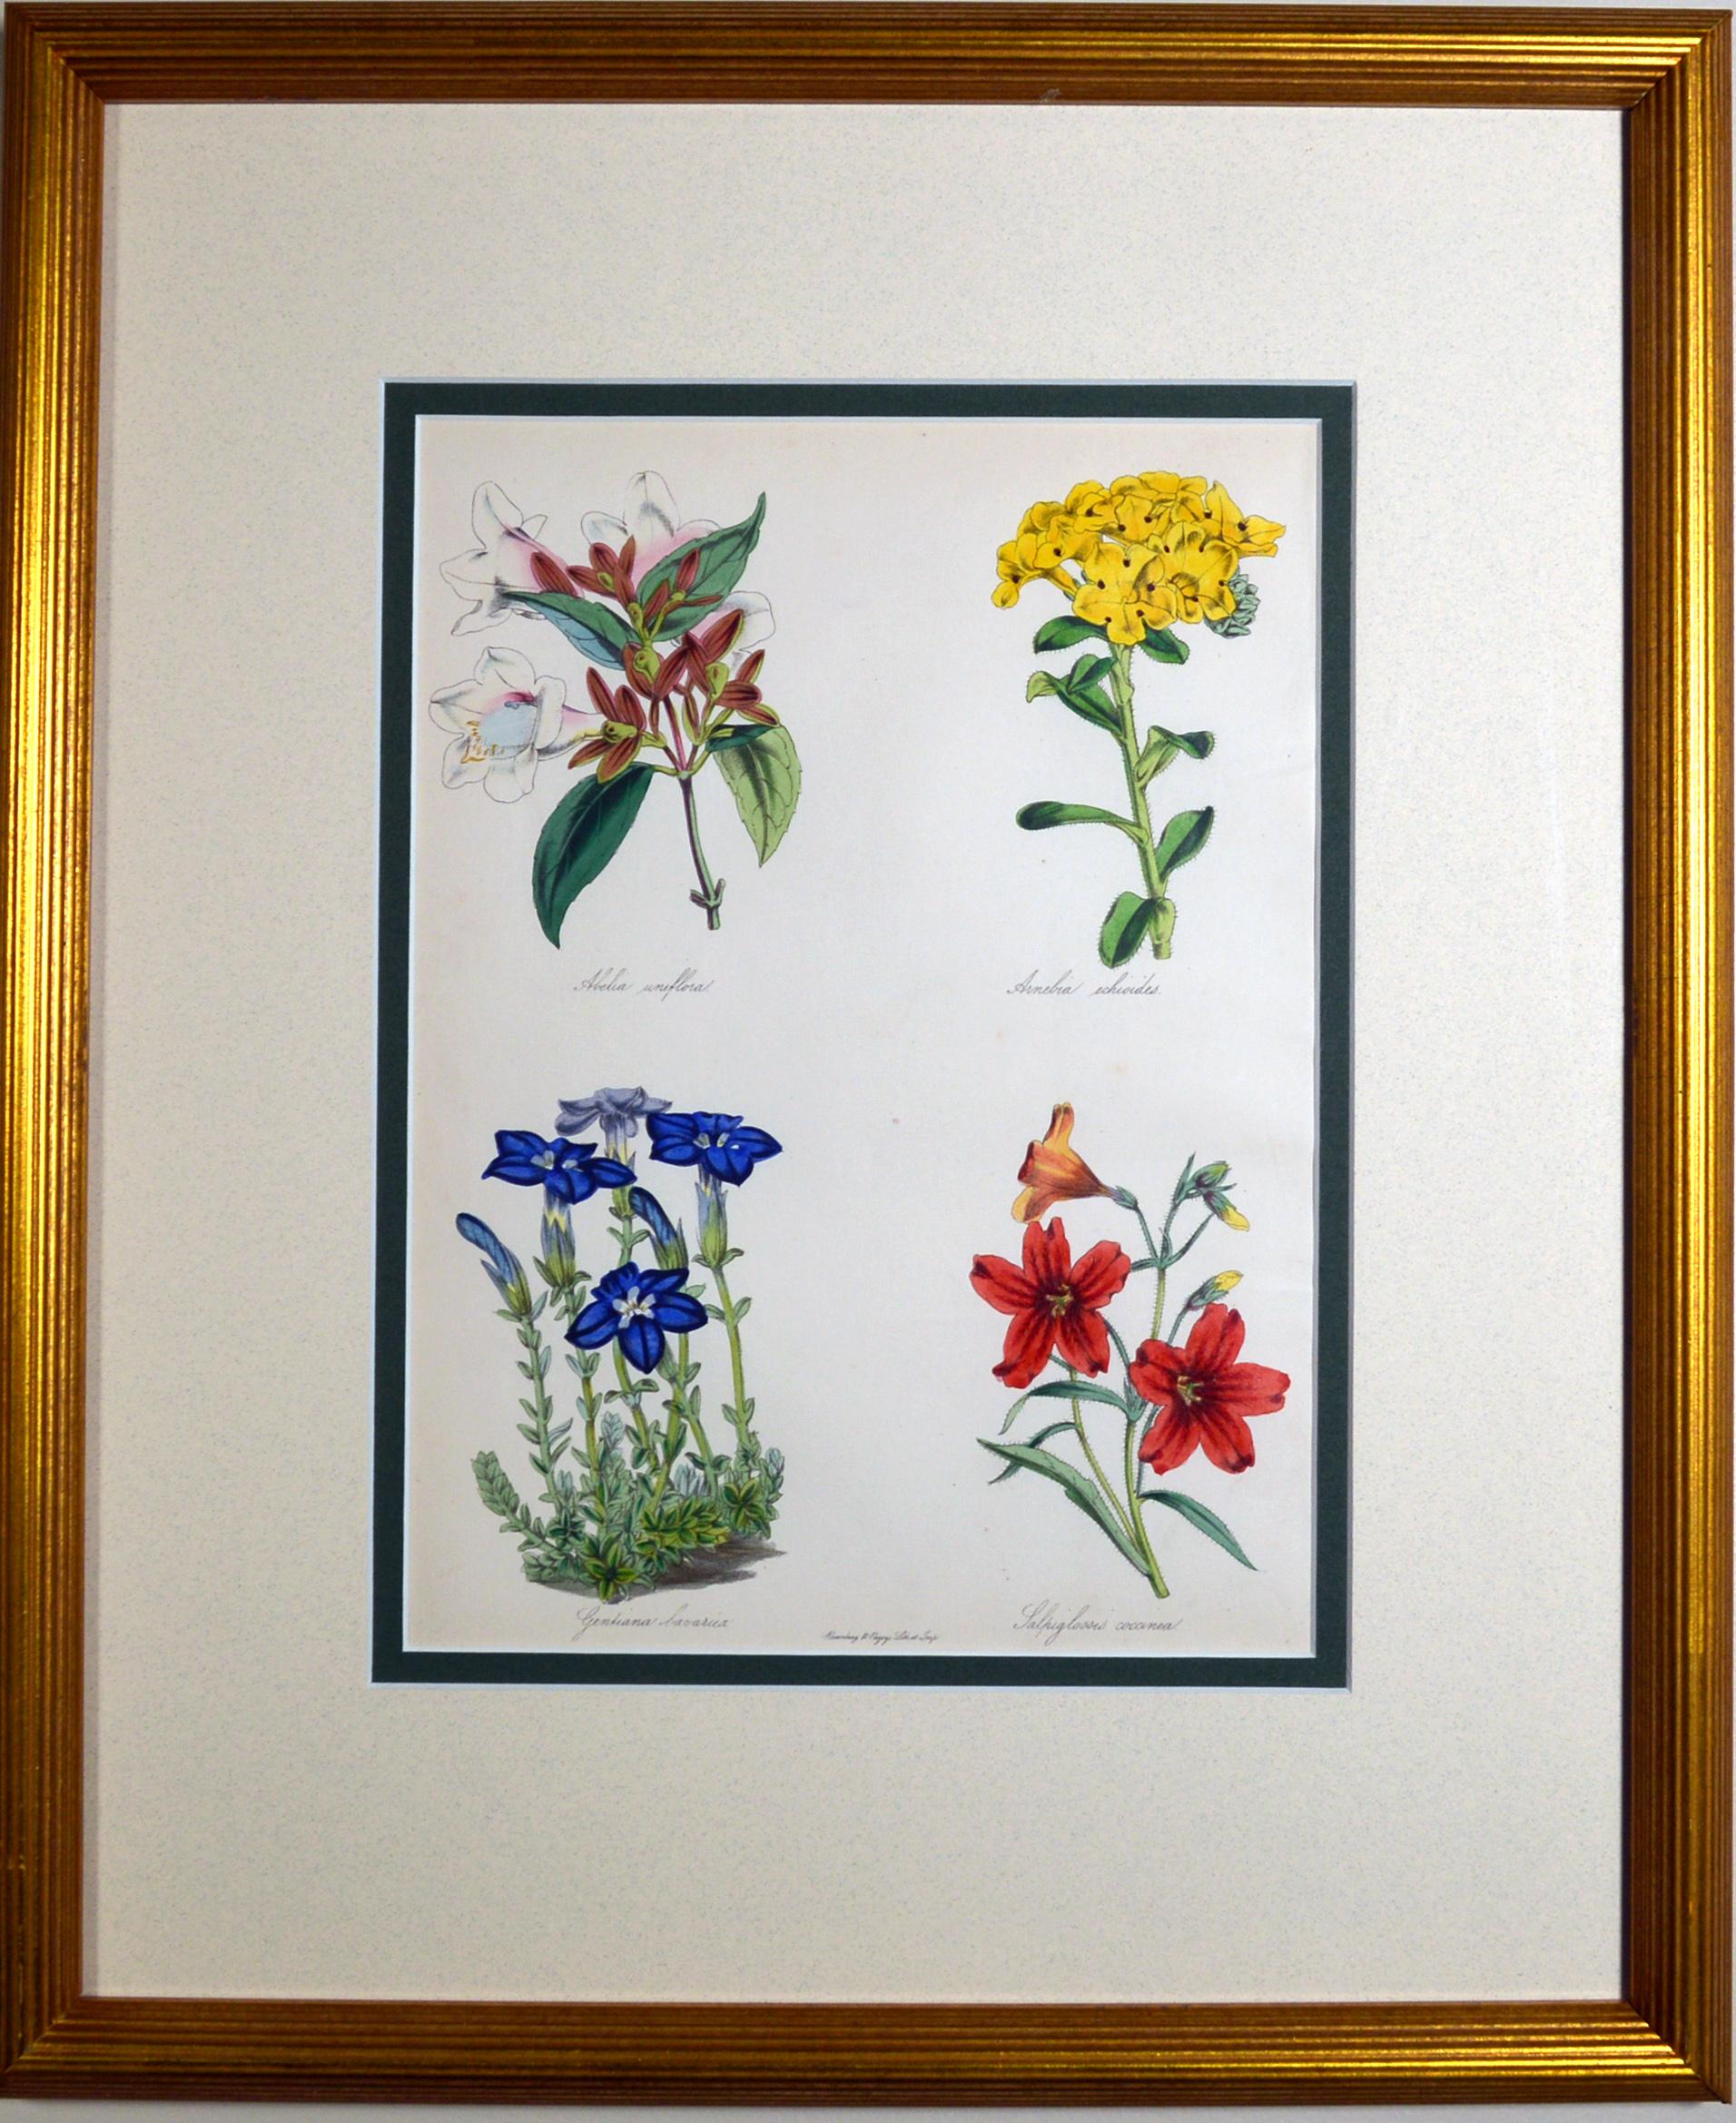 Set of botanical prints,
W. Thompson
